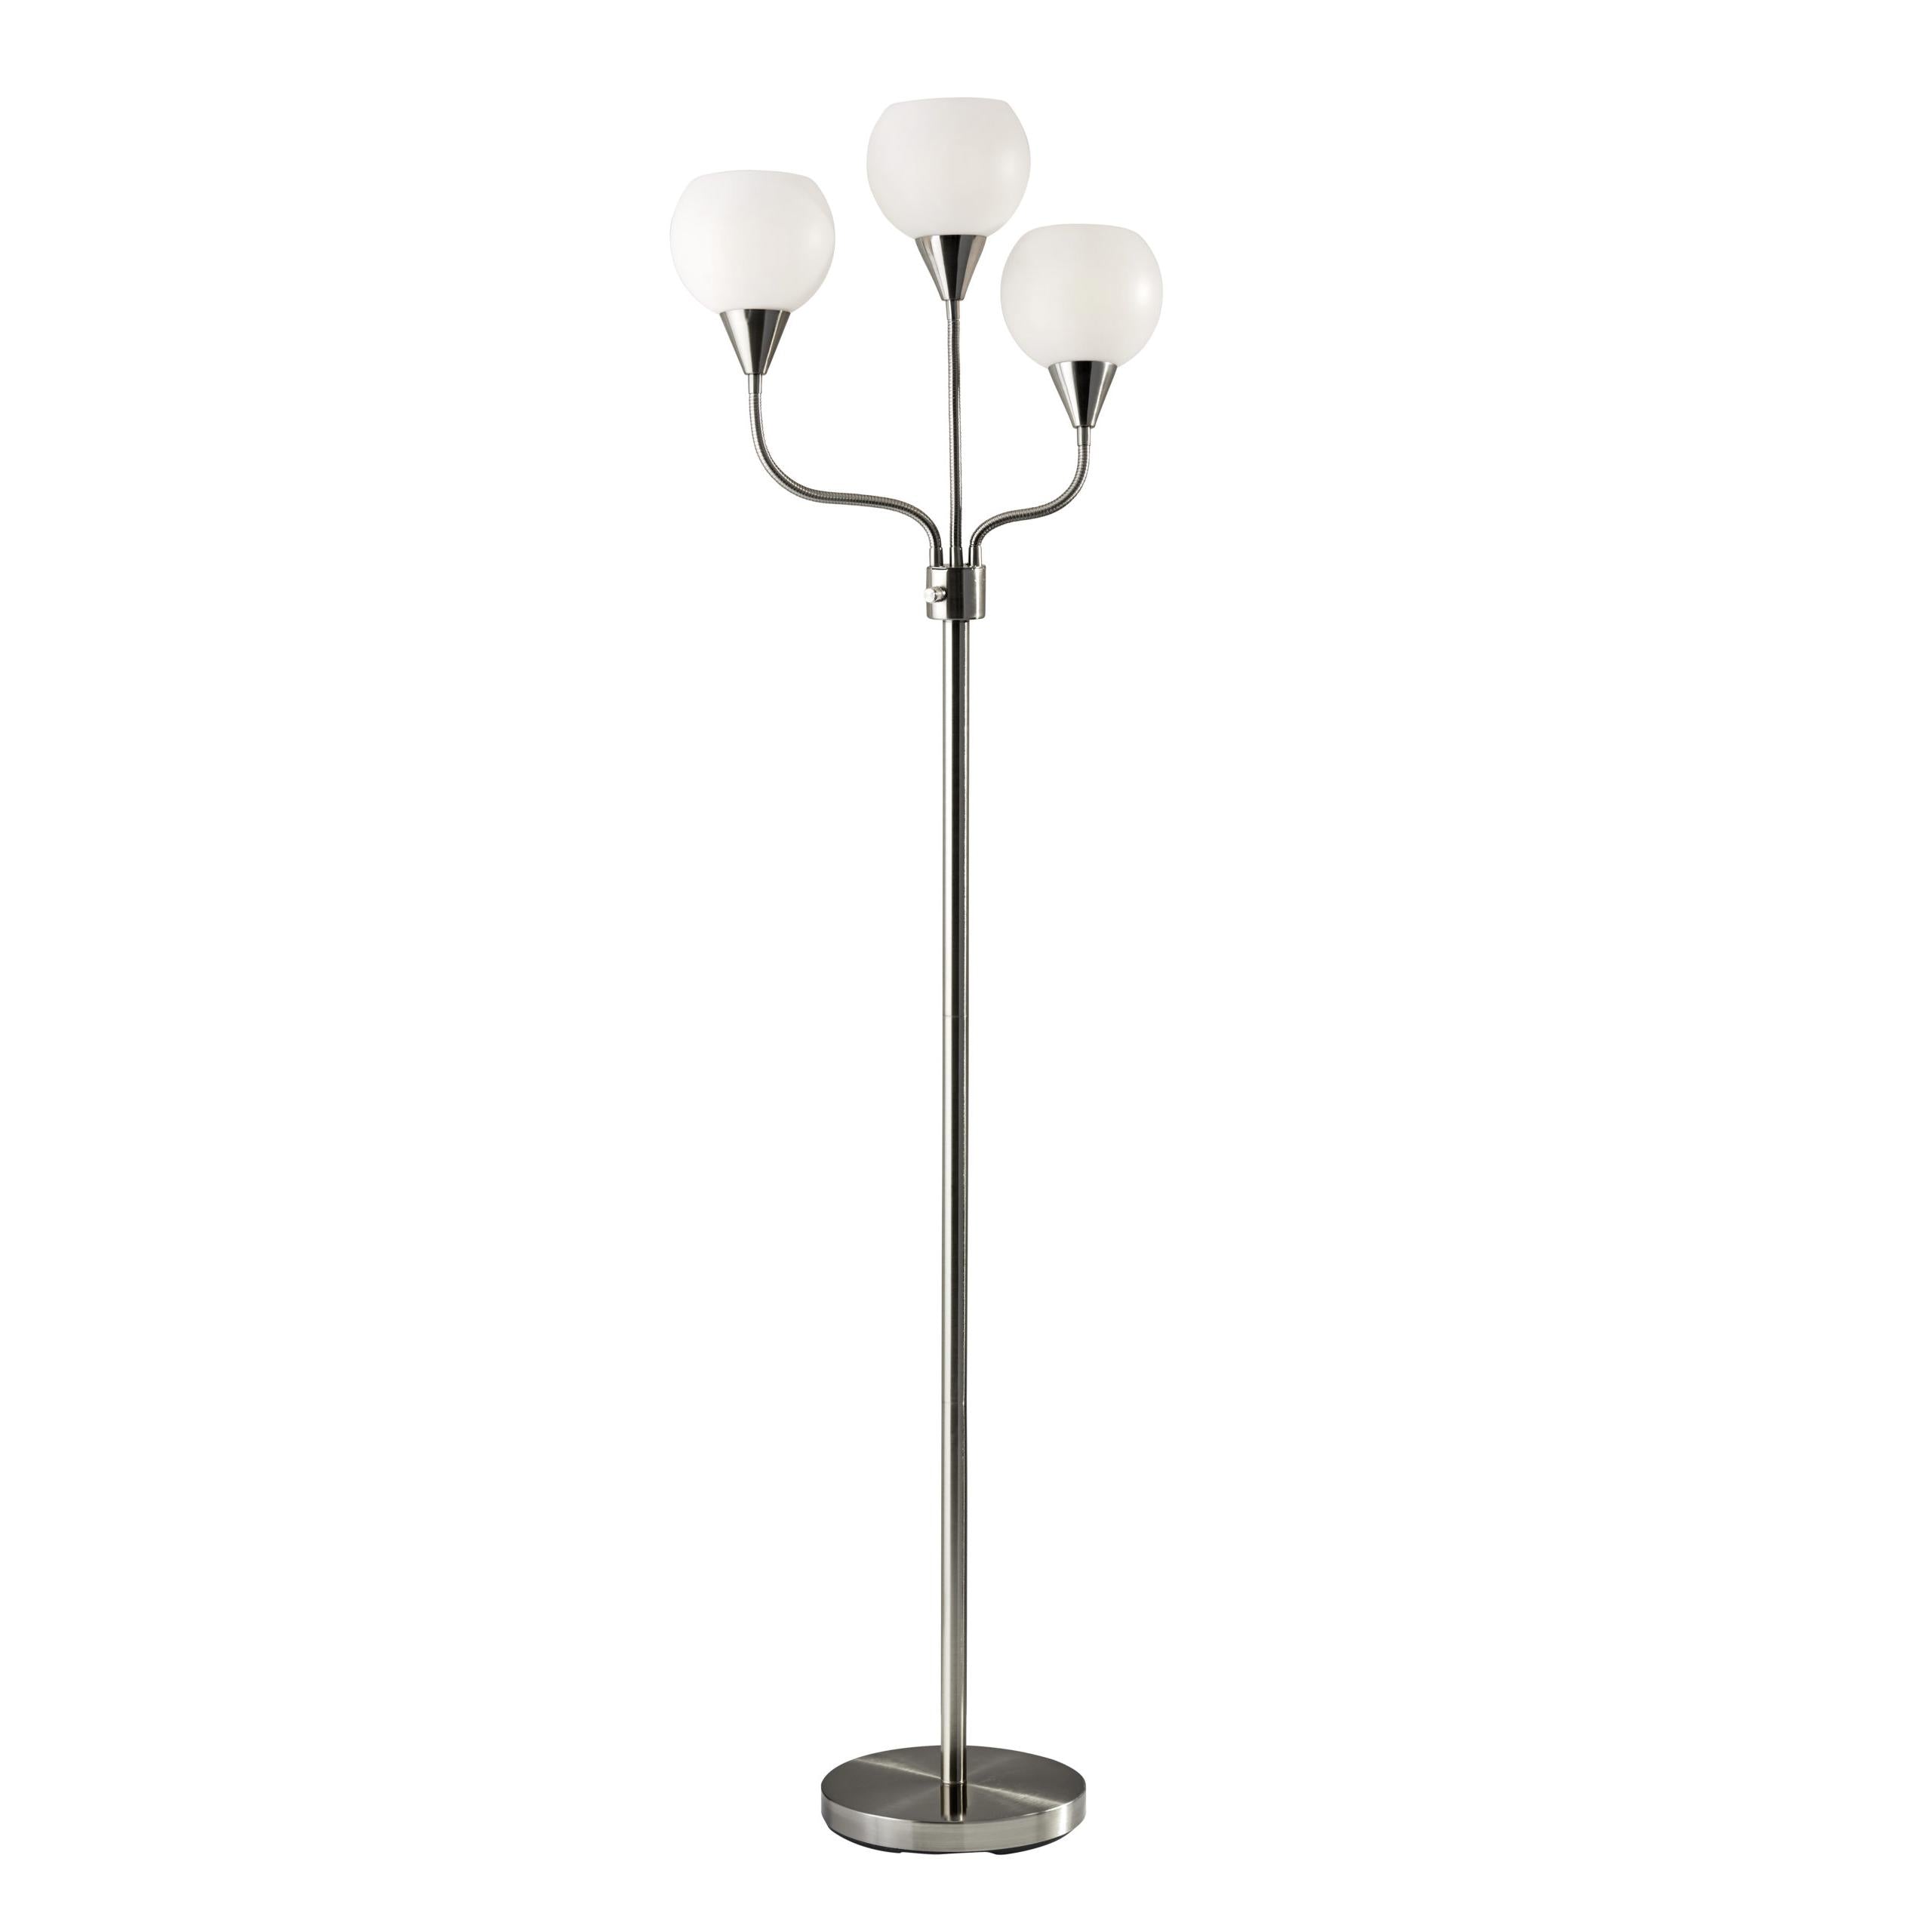 PHILLIP Floor lamp Stainless steel - 1534-22 | ADESSO